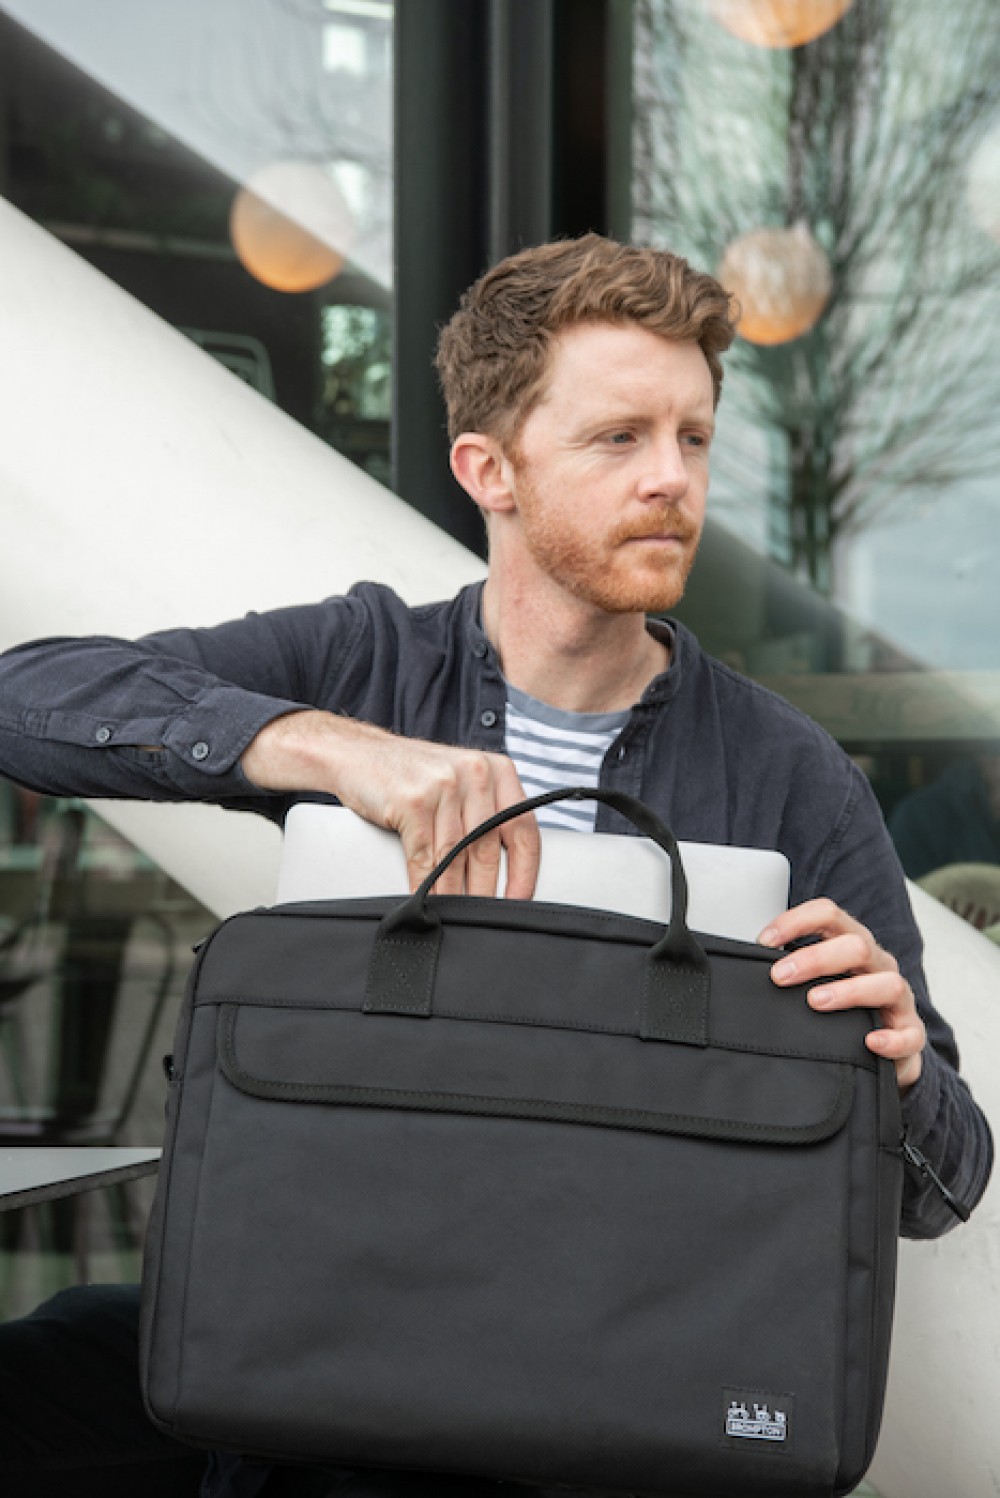 Brompton Metro City Bag - perfect laptop case for Bromptoners